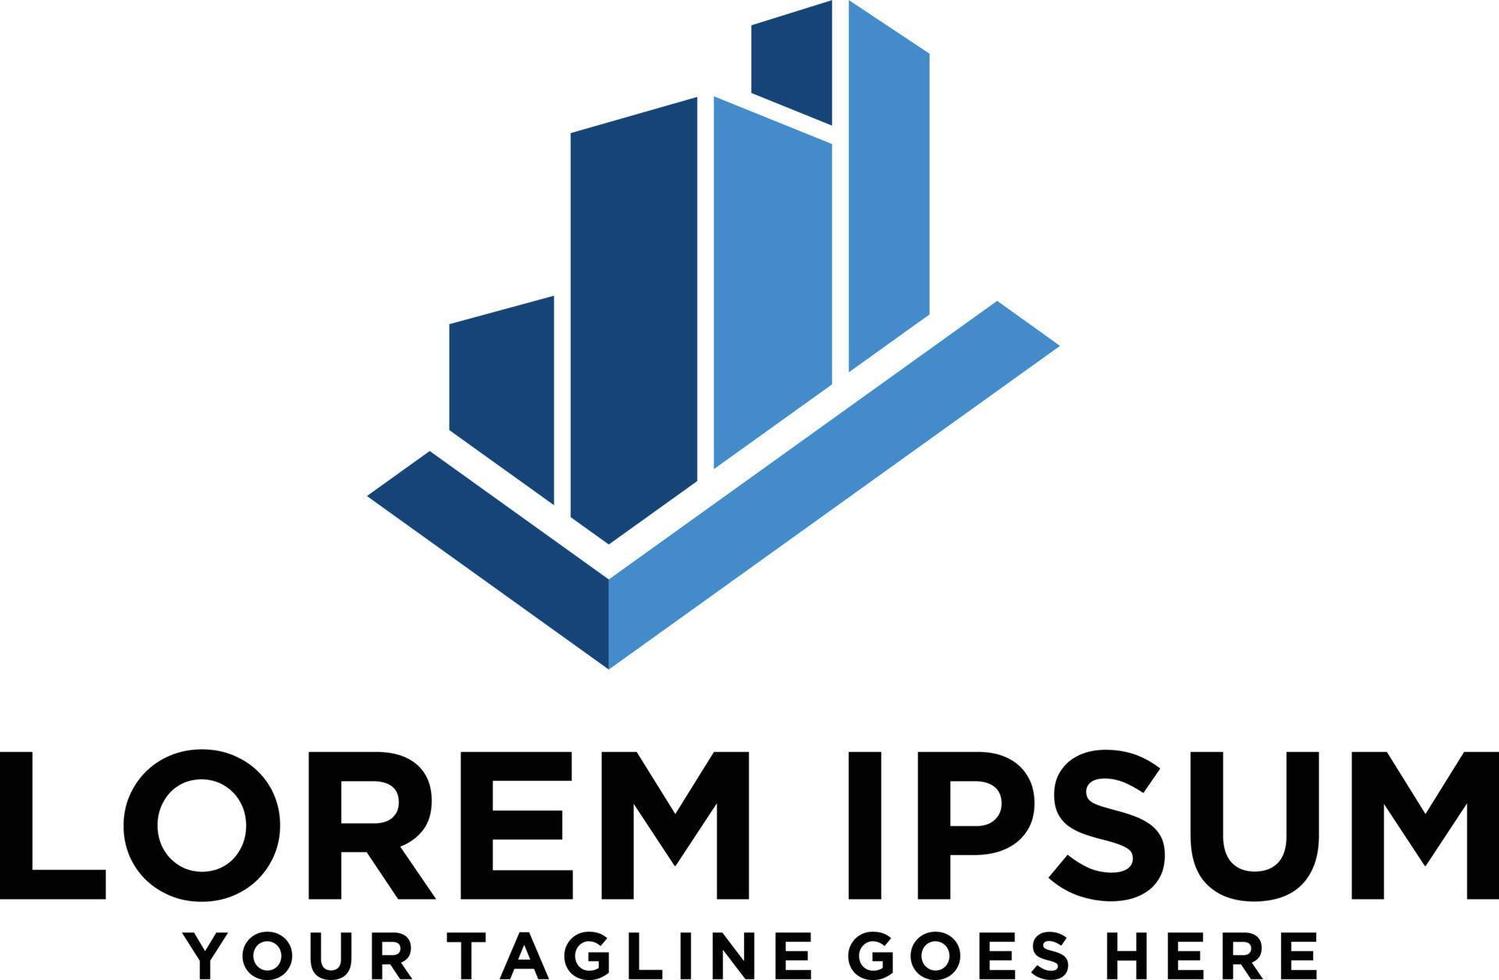 Investment Property building logo design vector